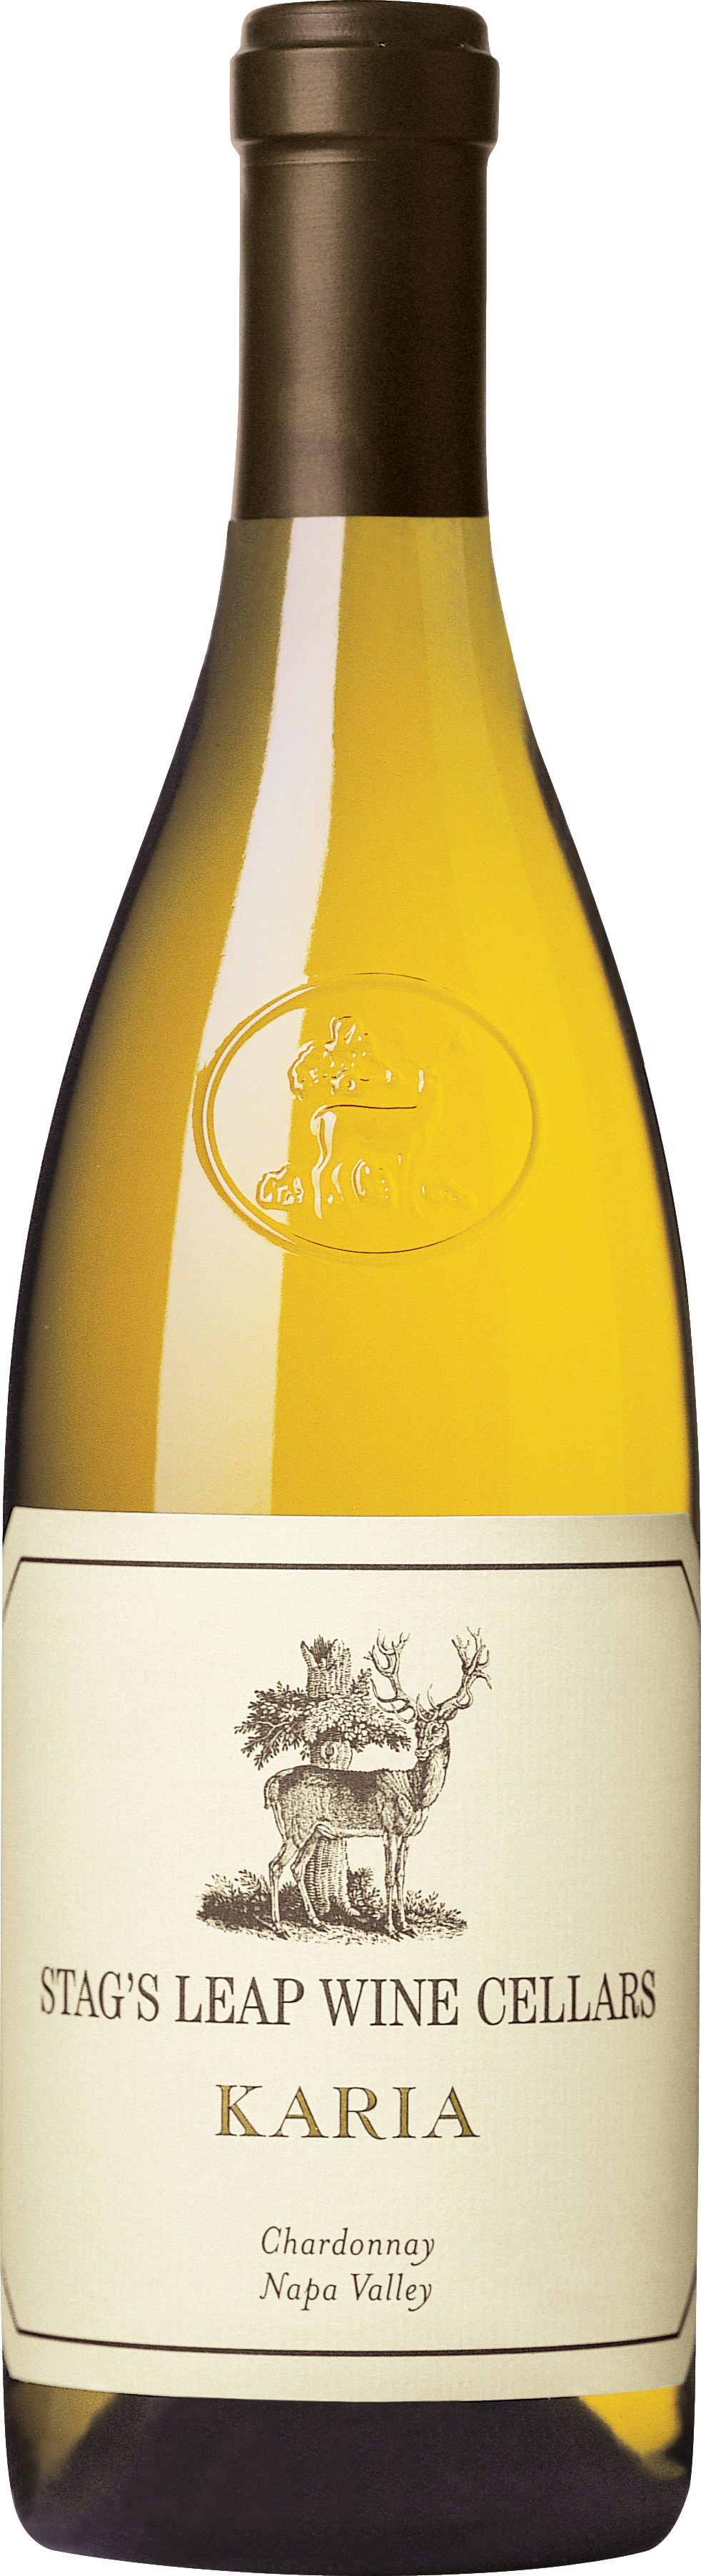 Stag's Leap Wine Cellars Karia Chardonnay 2020